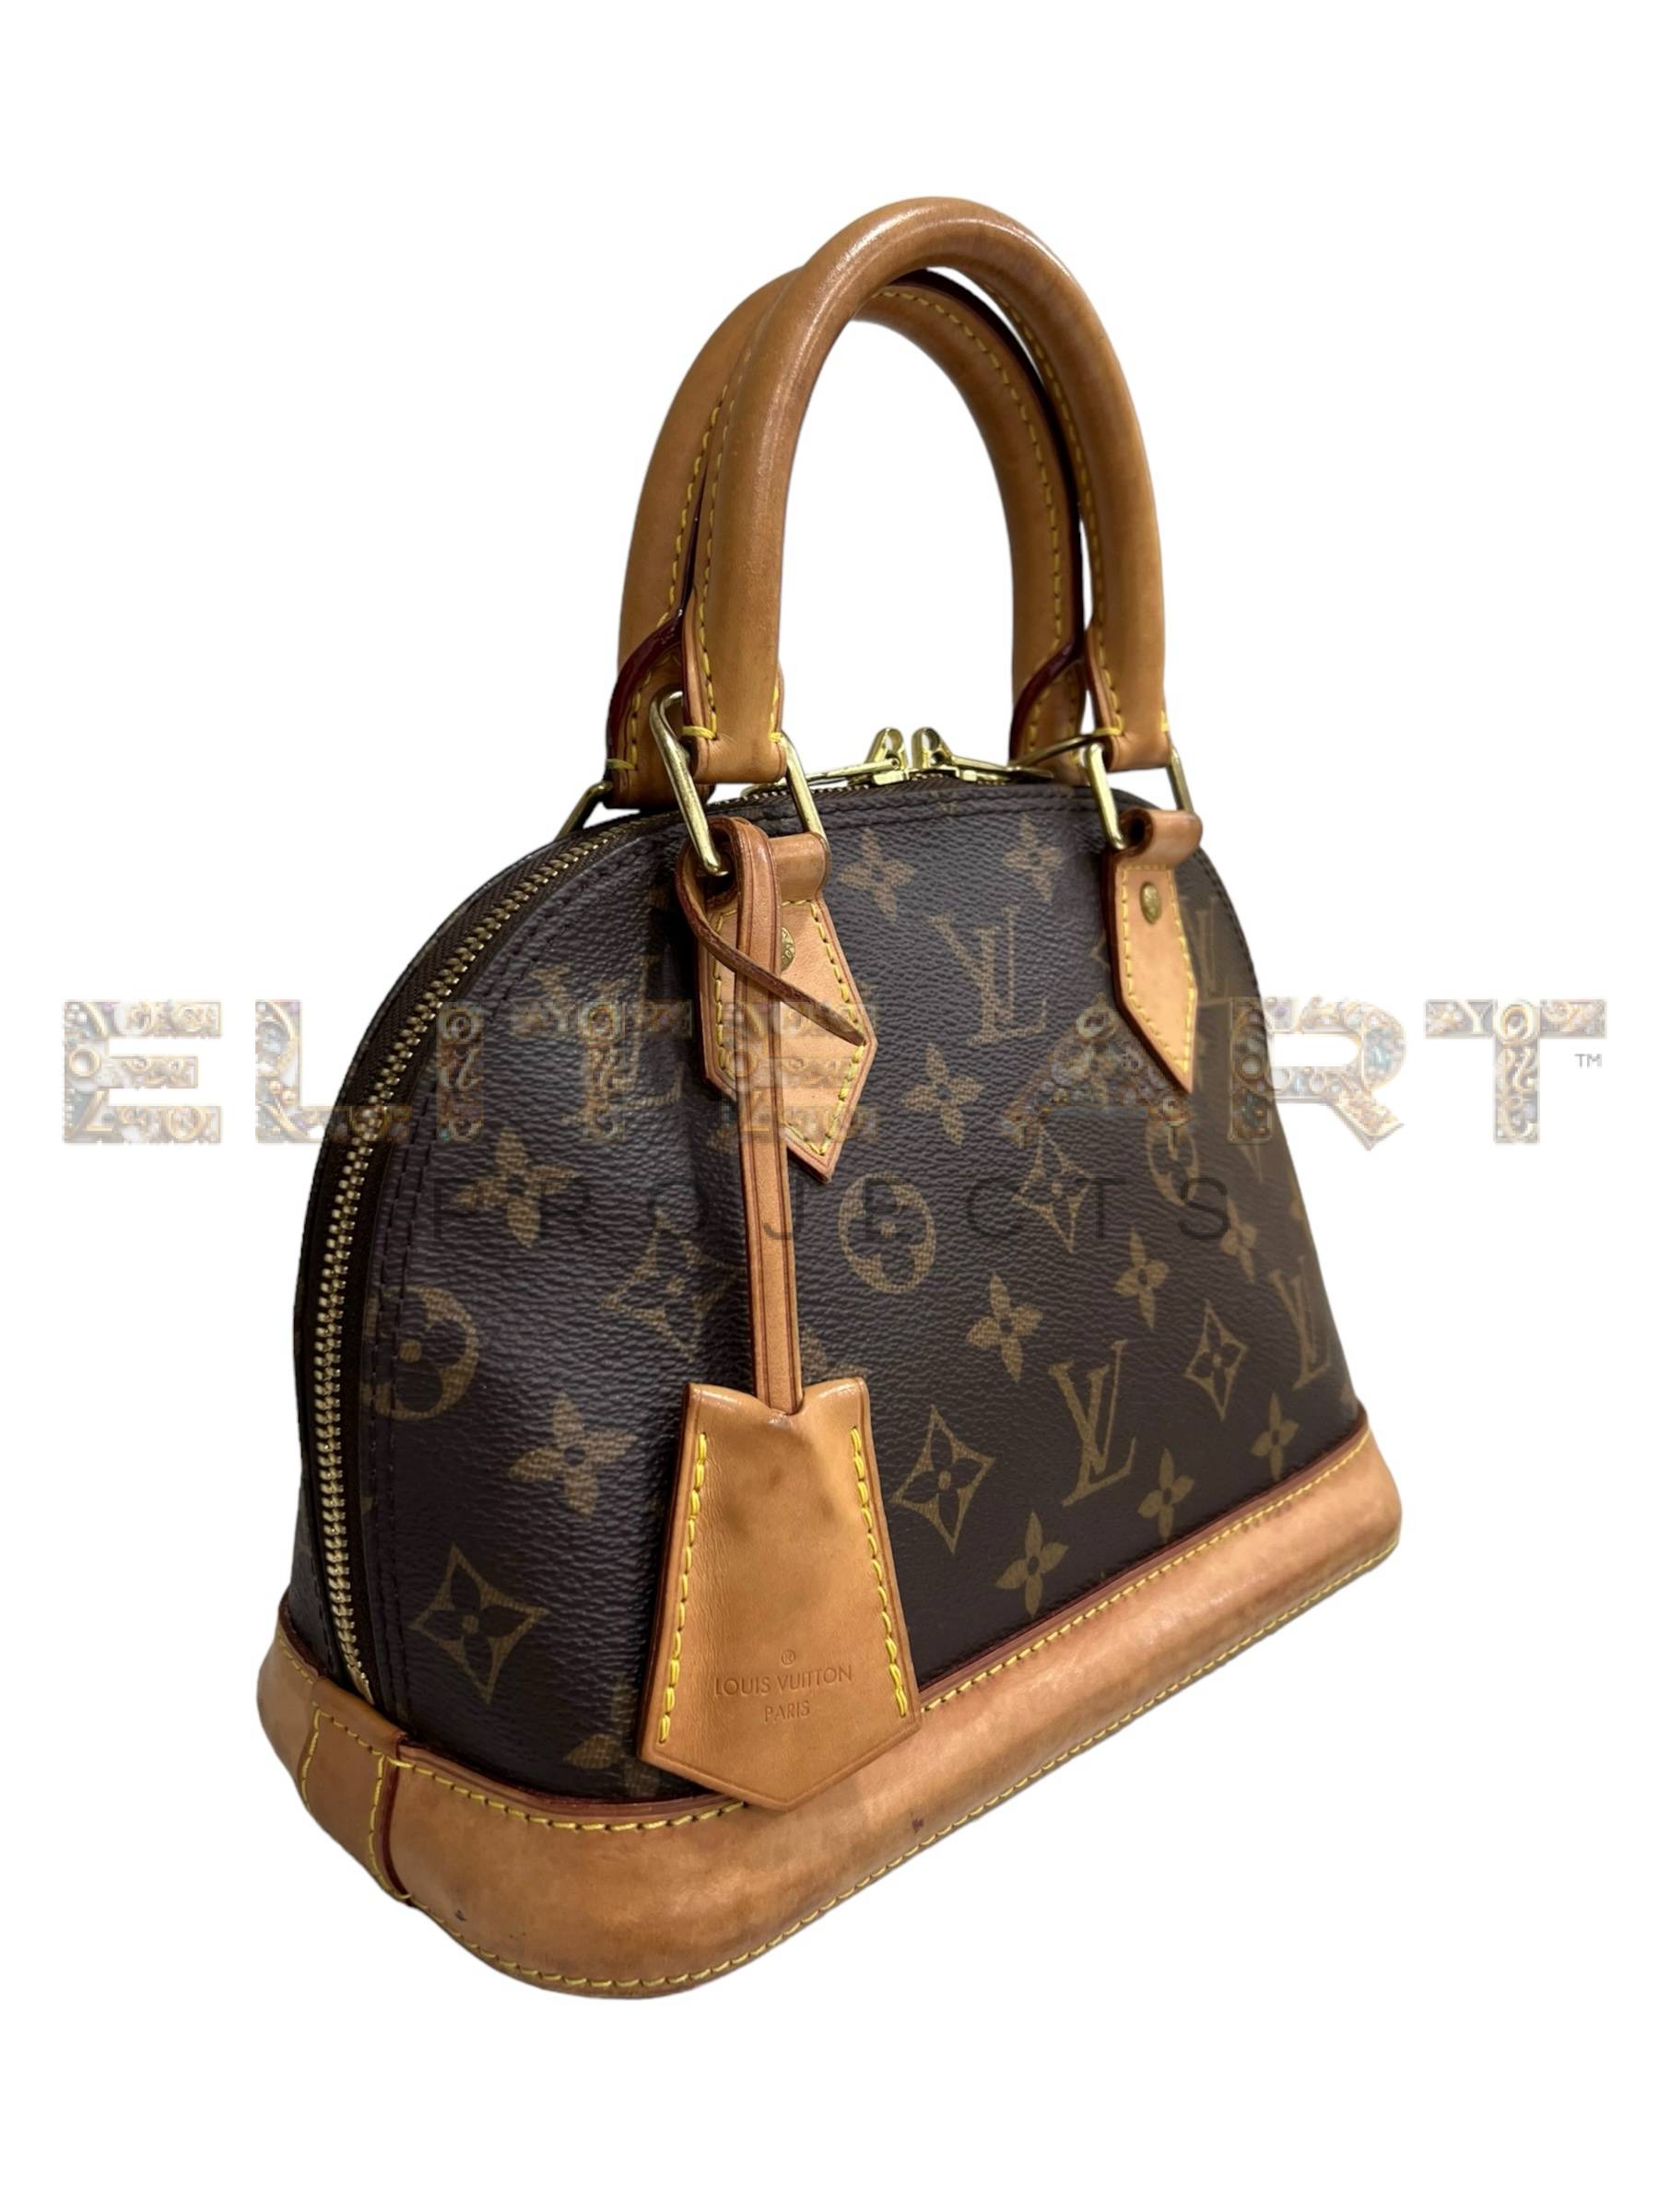 Louis Vuitton, Alma, BB bag